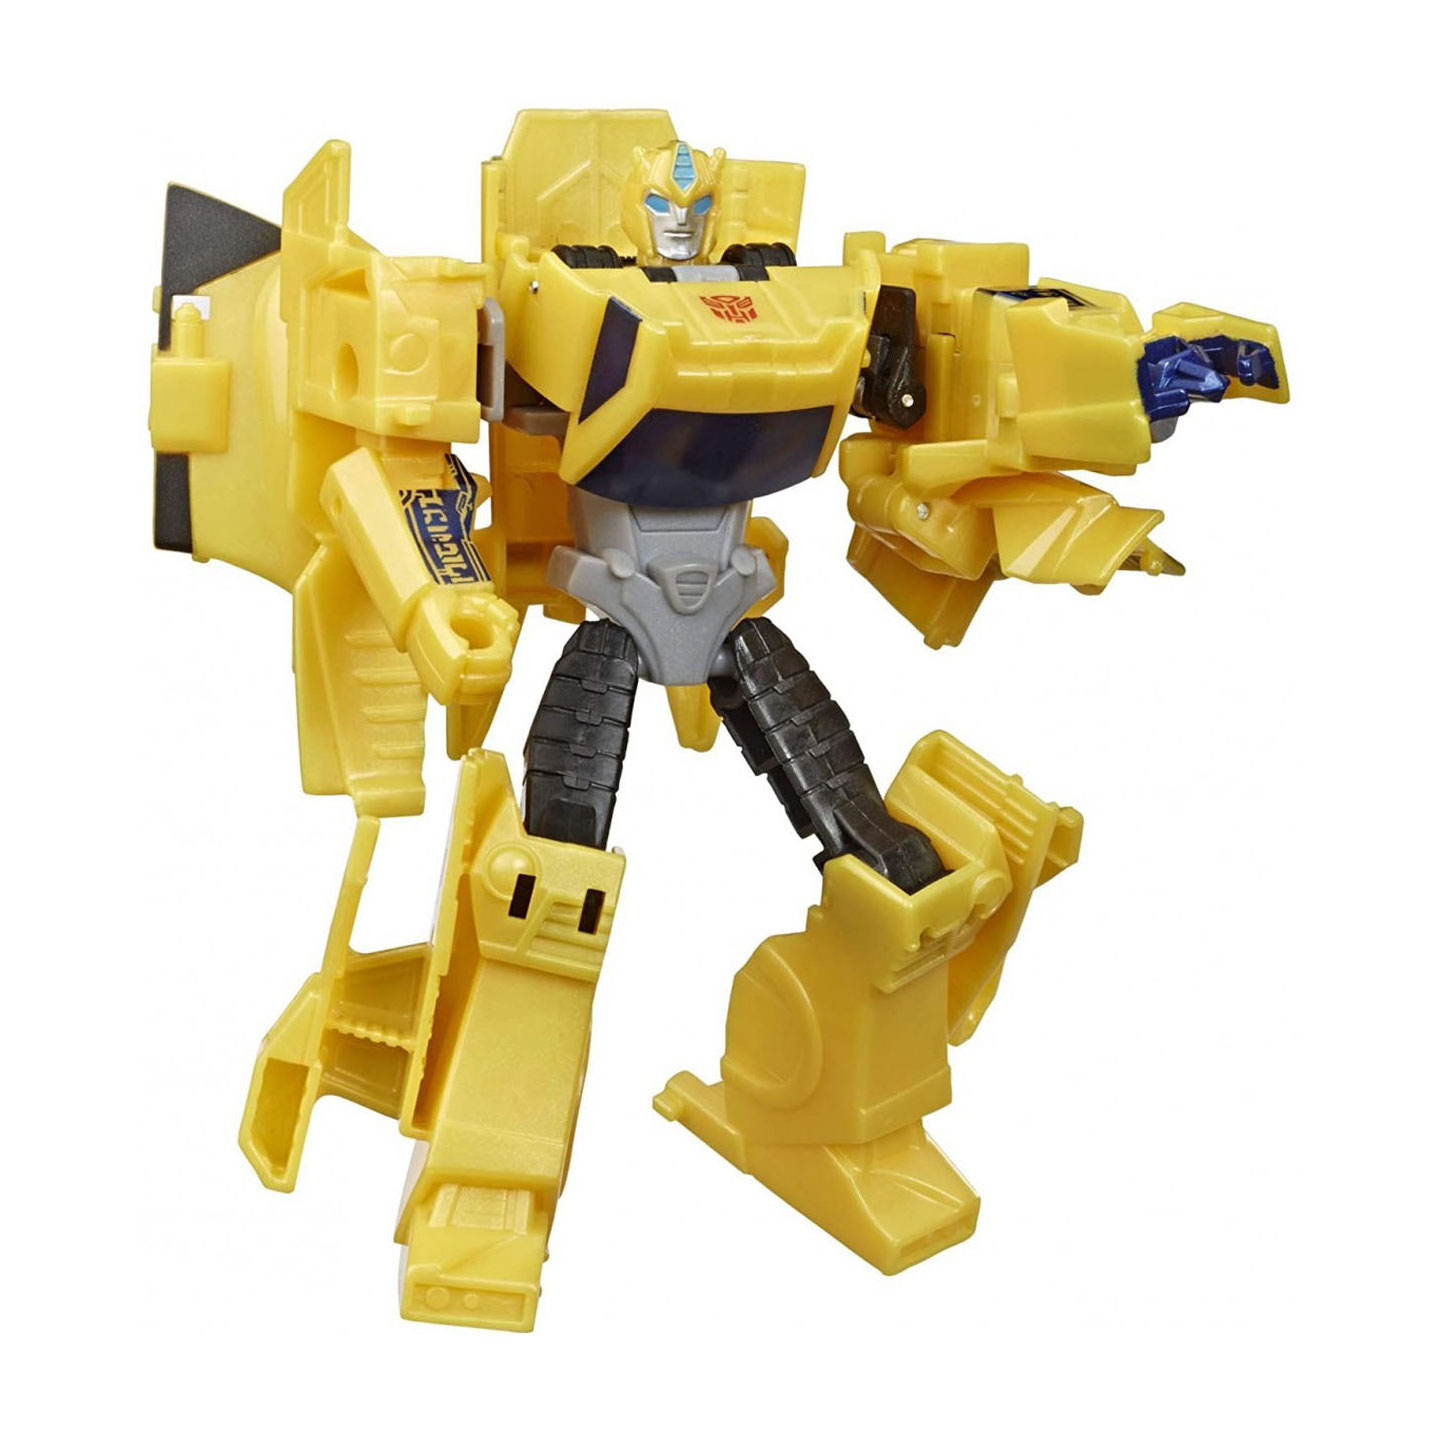 Transformers Cyberverse Warrior - Bumblebee, 15cm